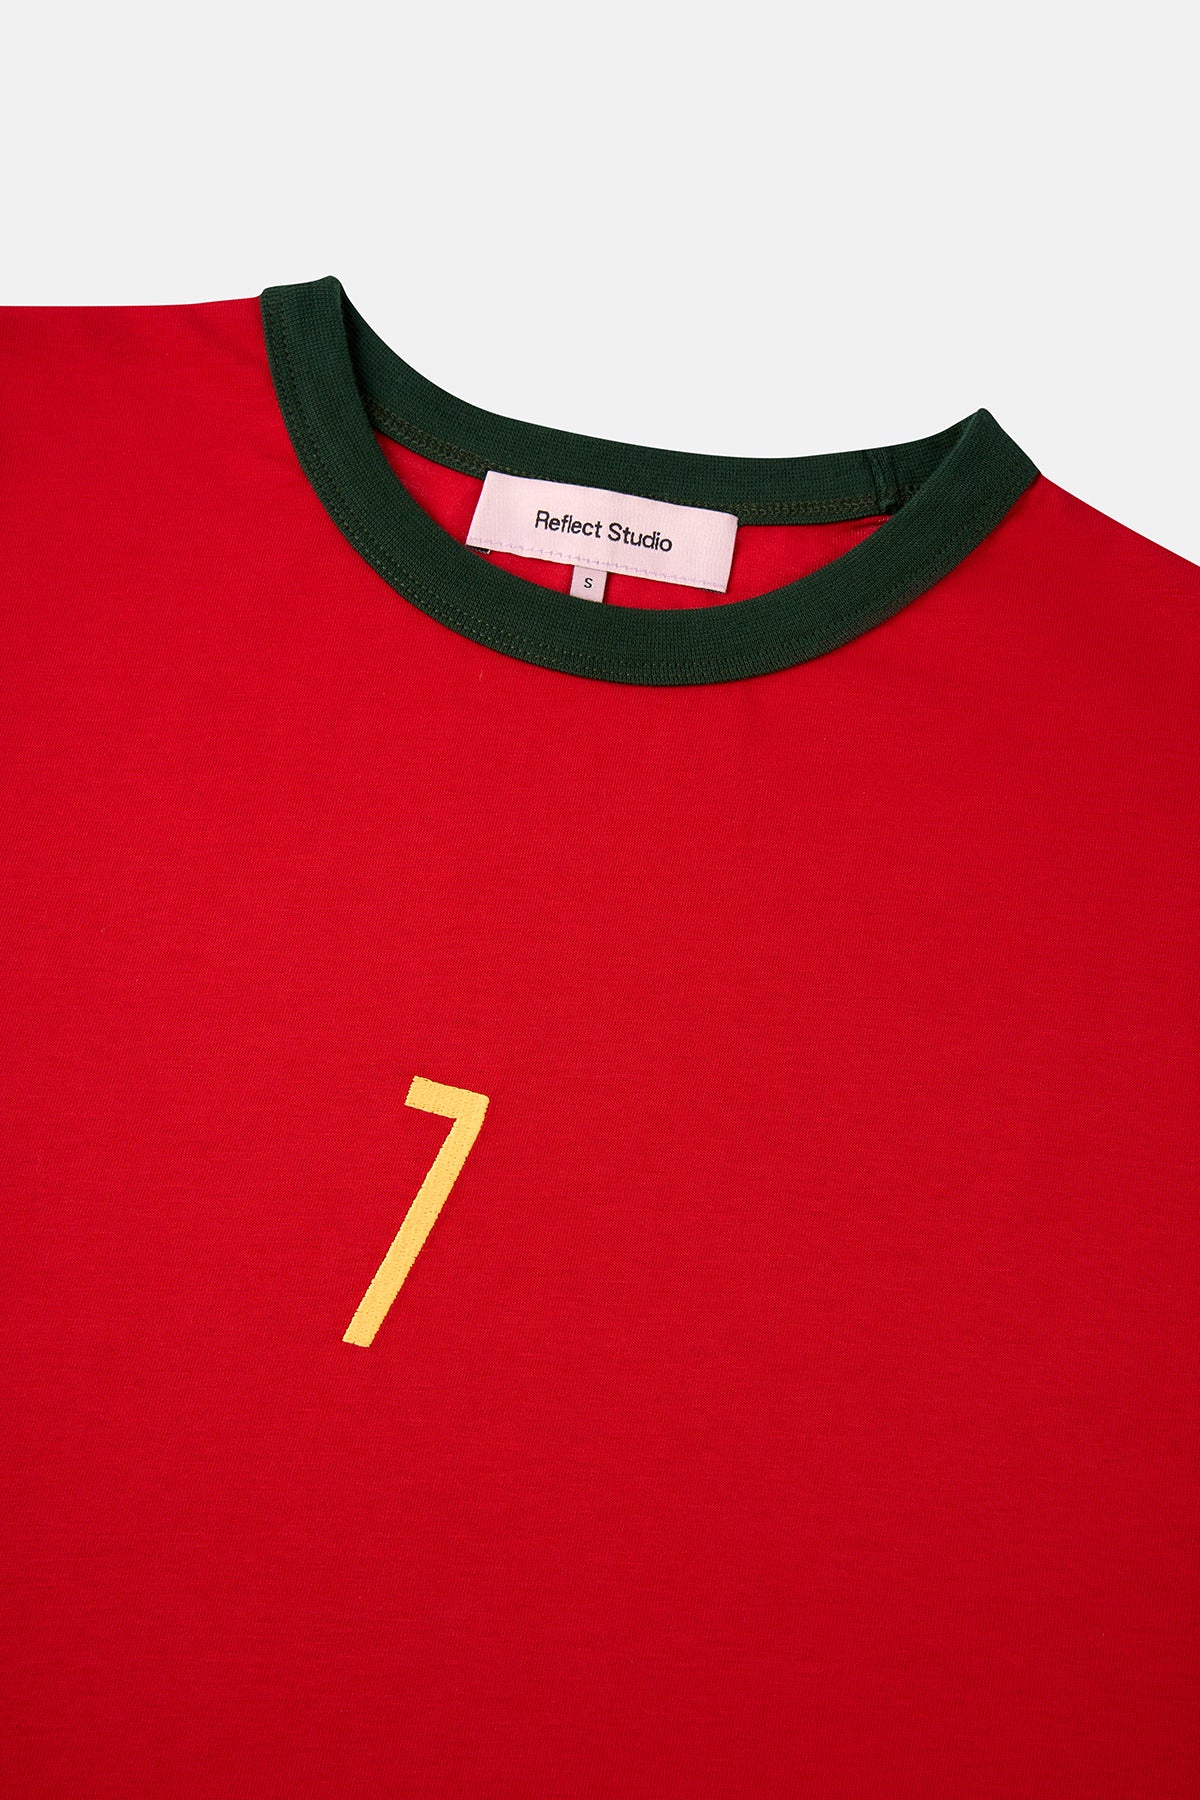 Portugal 7  Supreme T-shirt - Kırmızı